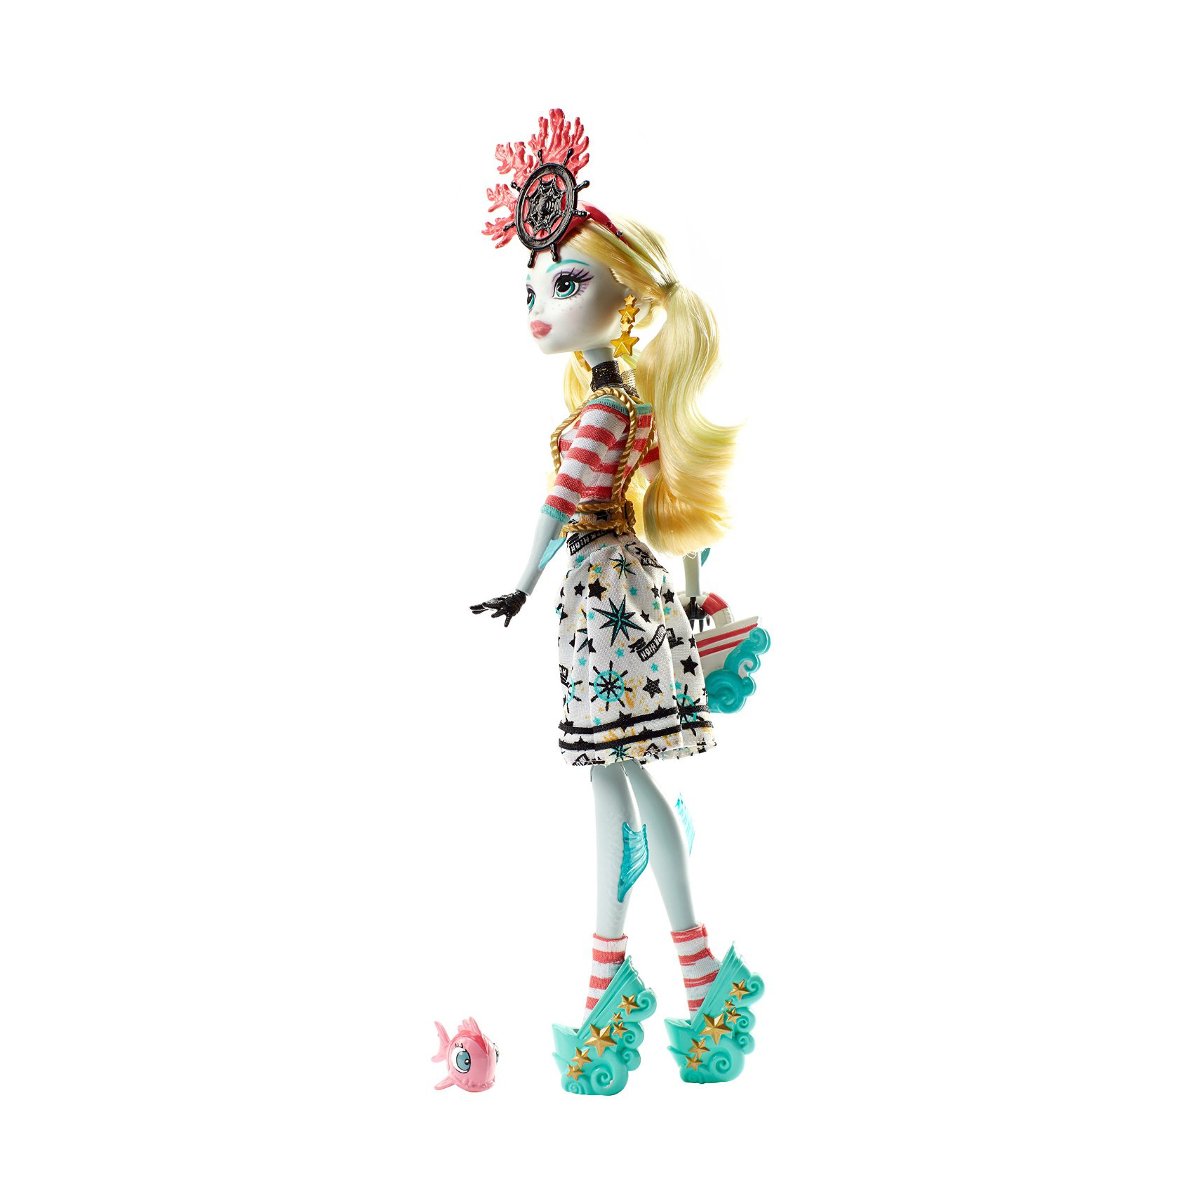 Кукла Monster High - Кораблекрушение - Лагуна Блю  